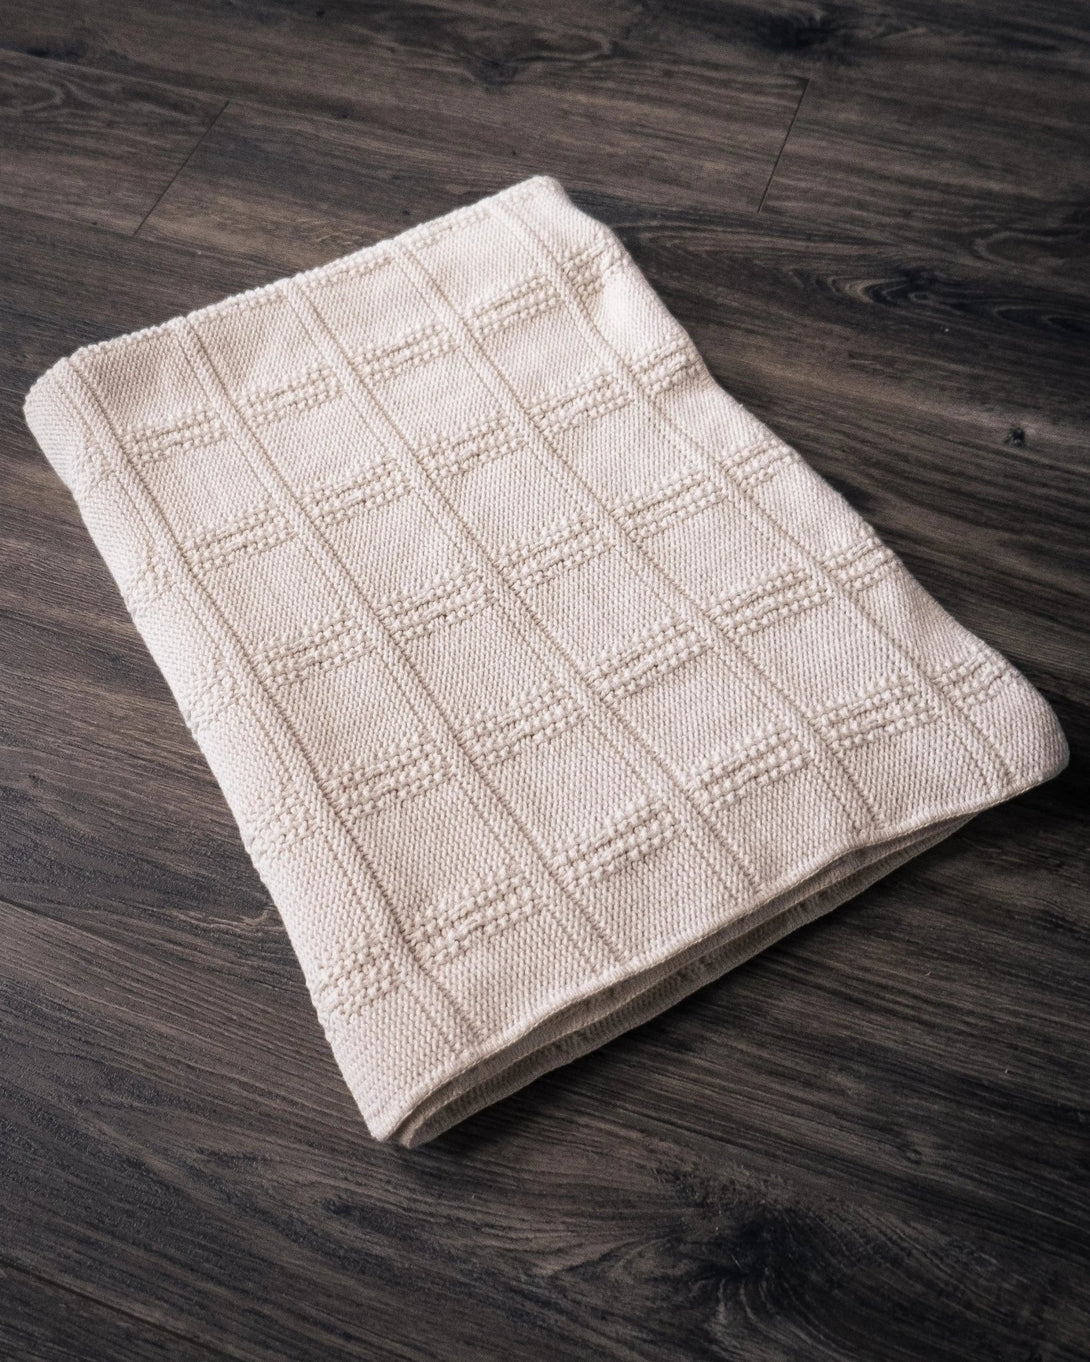 FRKM Box Pattern Blanket/Throw - Merrow Knits - USA made Knit Products